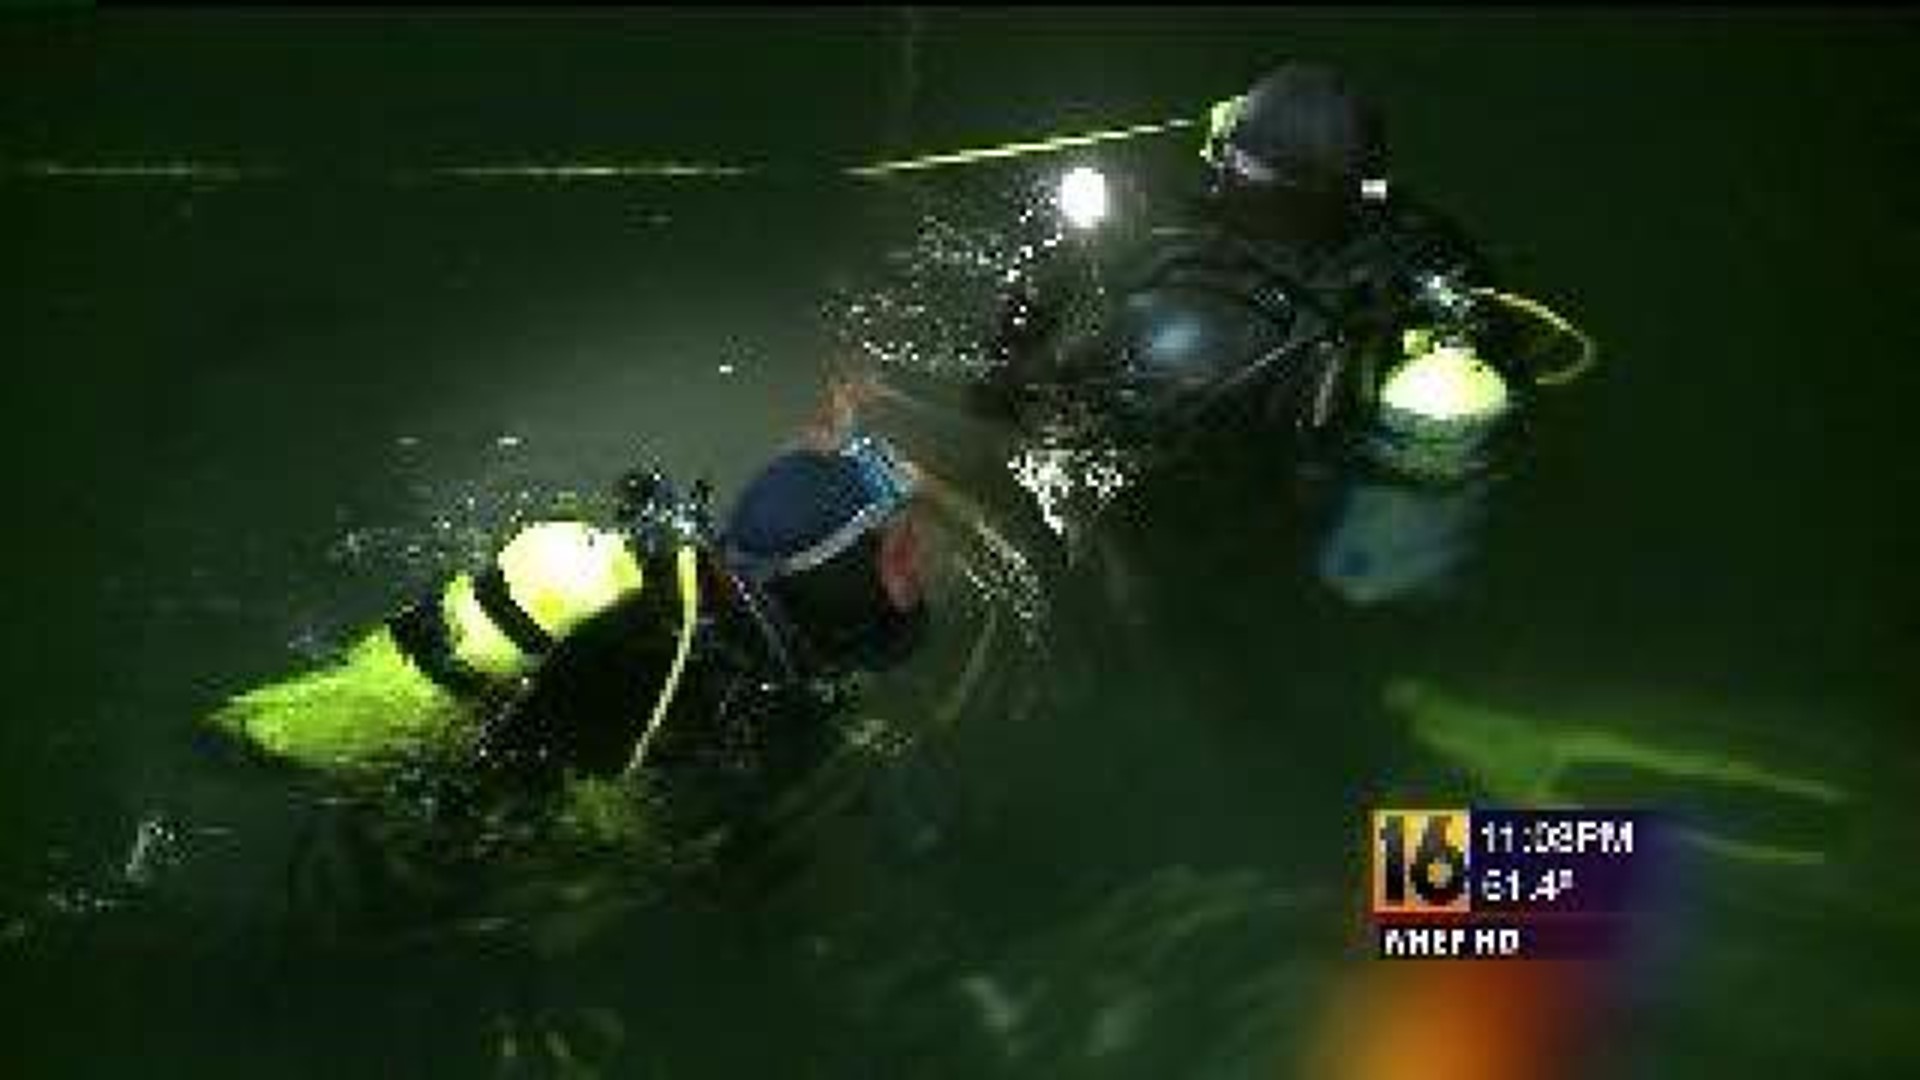 Body Found in Submerged Car